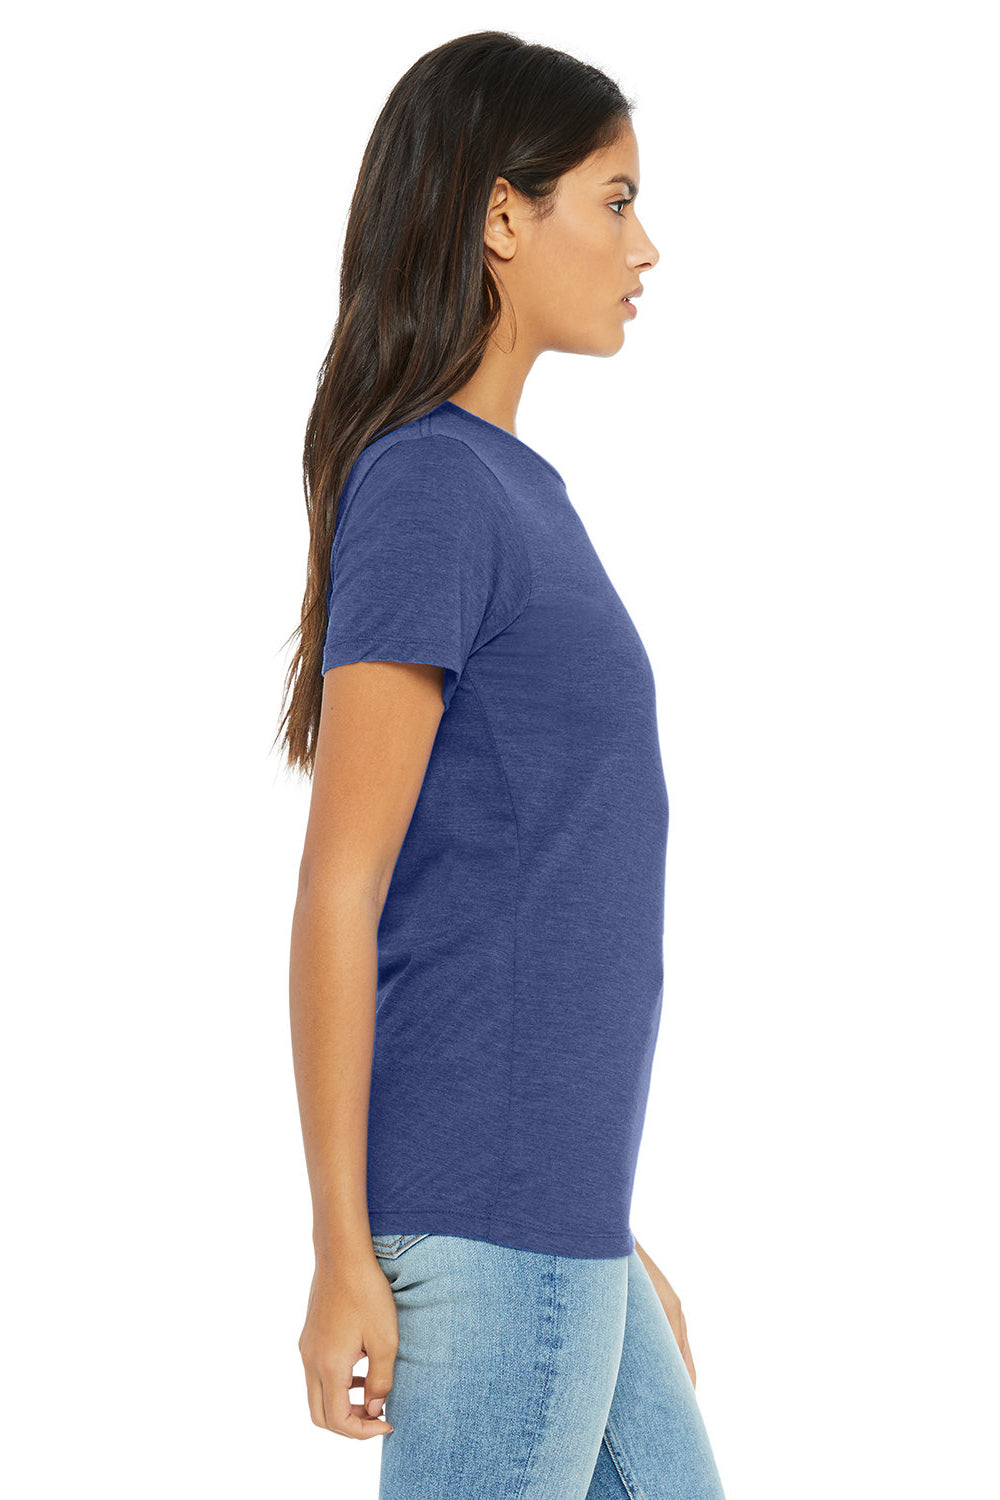 Bella + Canvas BC6413 Womens Short Sleeve Crewneck T-Shirt True Royal Blue Model Side